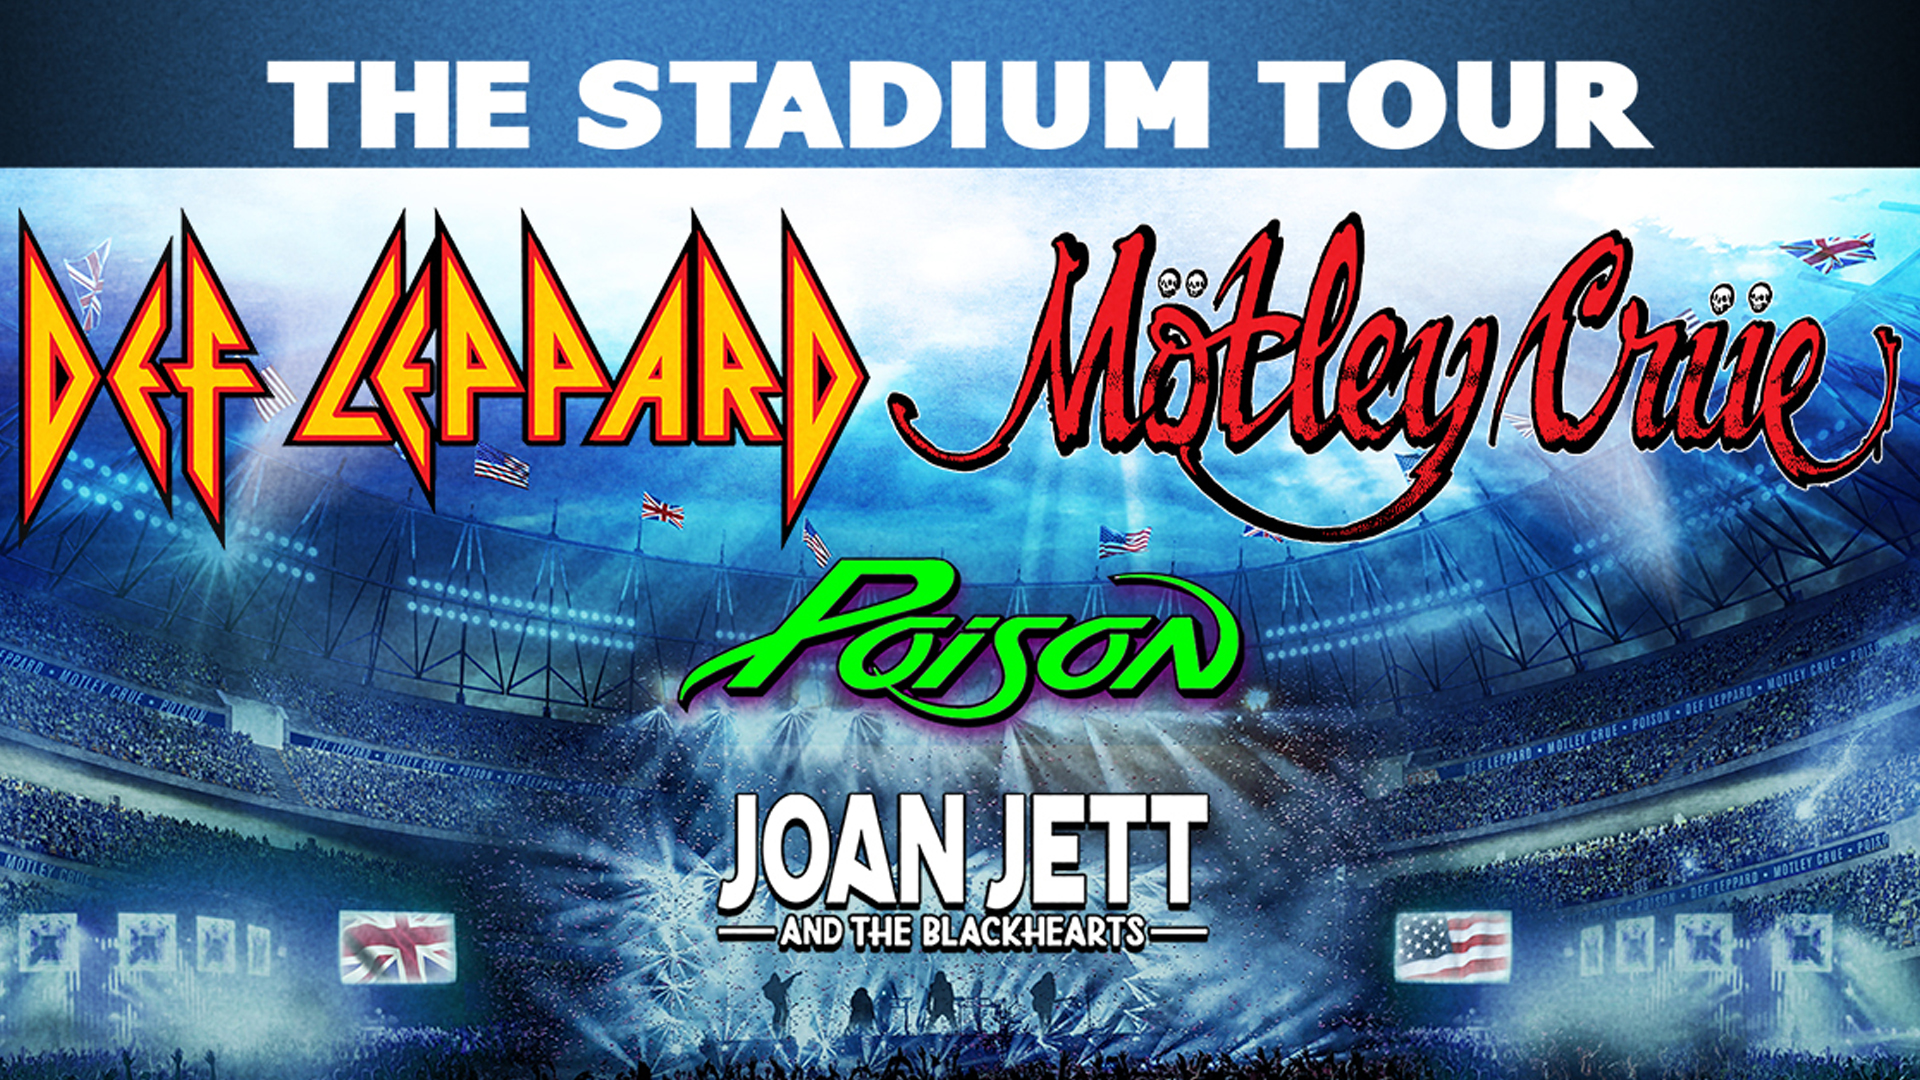 Def Leppard - The Stadium Tour with Mötley Crüe, Poison & Joan Jett